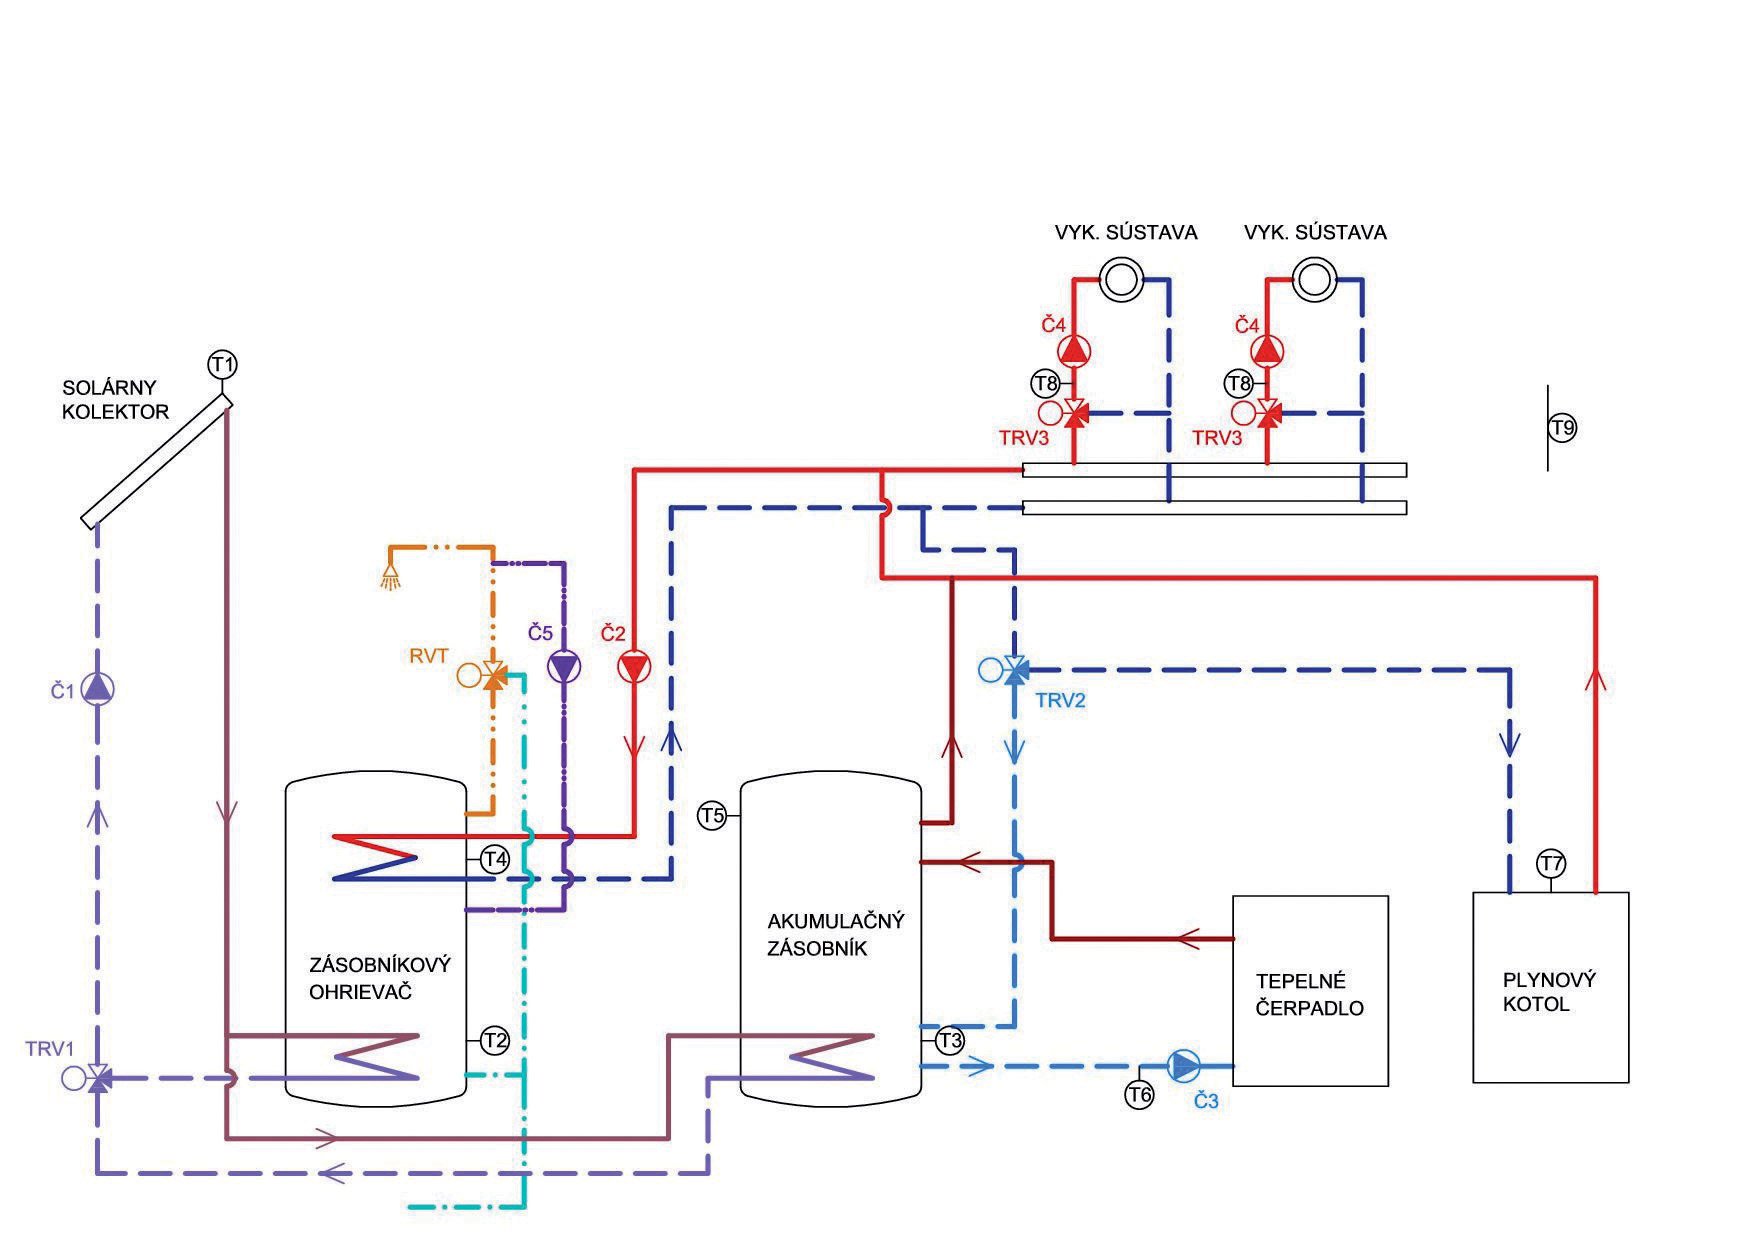 Obr. 4  Viacvalentný systém – zdroj tepla: solárny kolektor, tepelné čerpadlo a plynový kotol T1 až T9 – snímač teploty, TRV1 až TRV3 – trojcestný ventil so servopohonom,  RVT – regulačný ventil s termostatom, Č1 až Č5 – čerpadlo